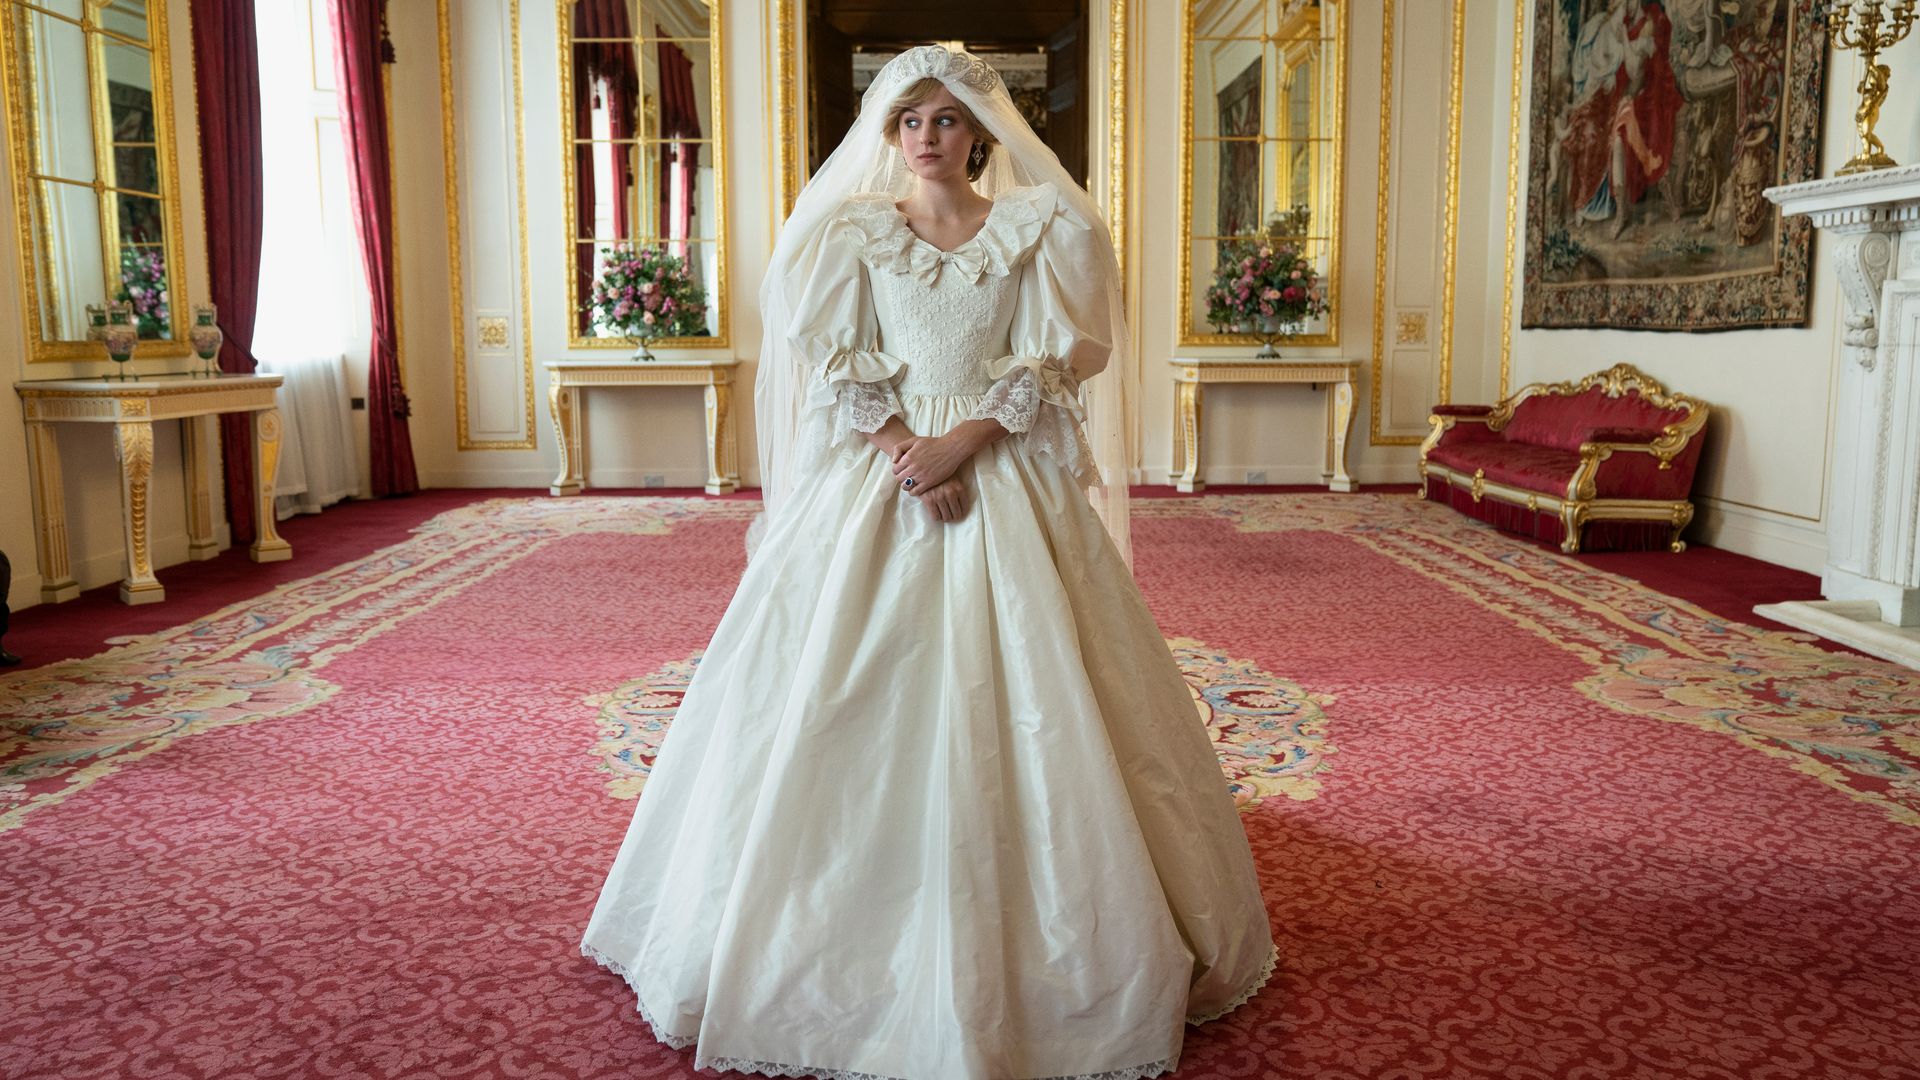 Emma Corrin as Princess Diana in wedding dress